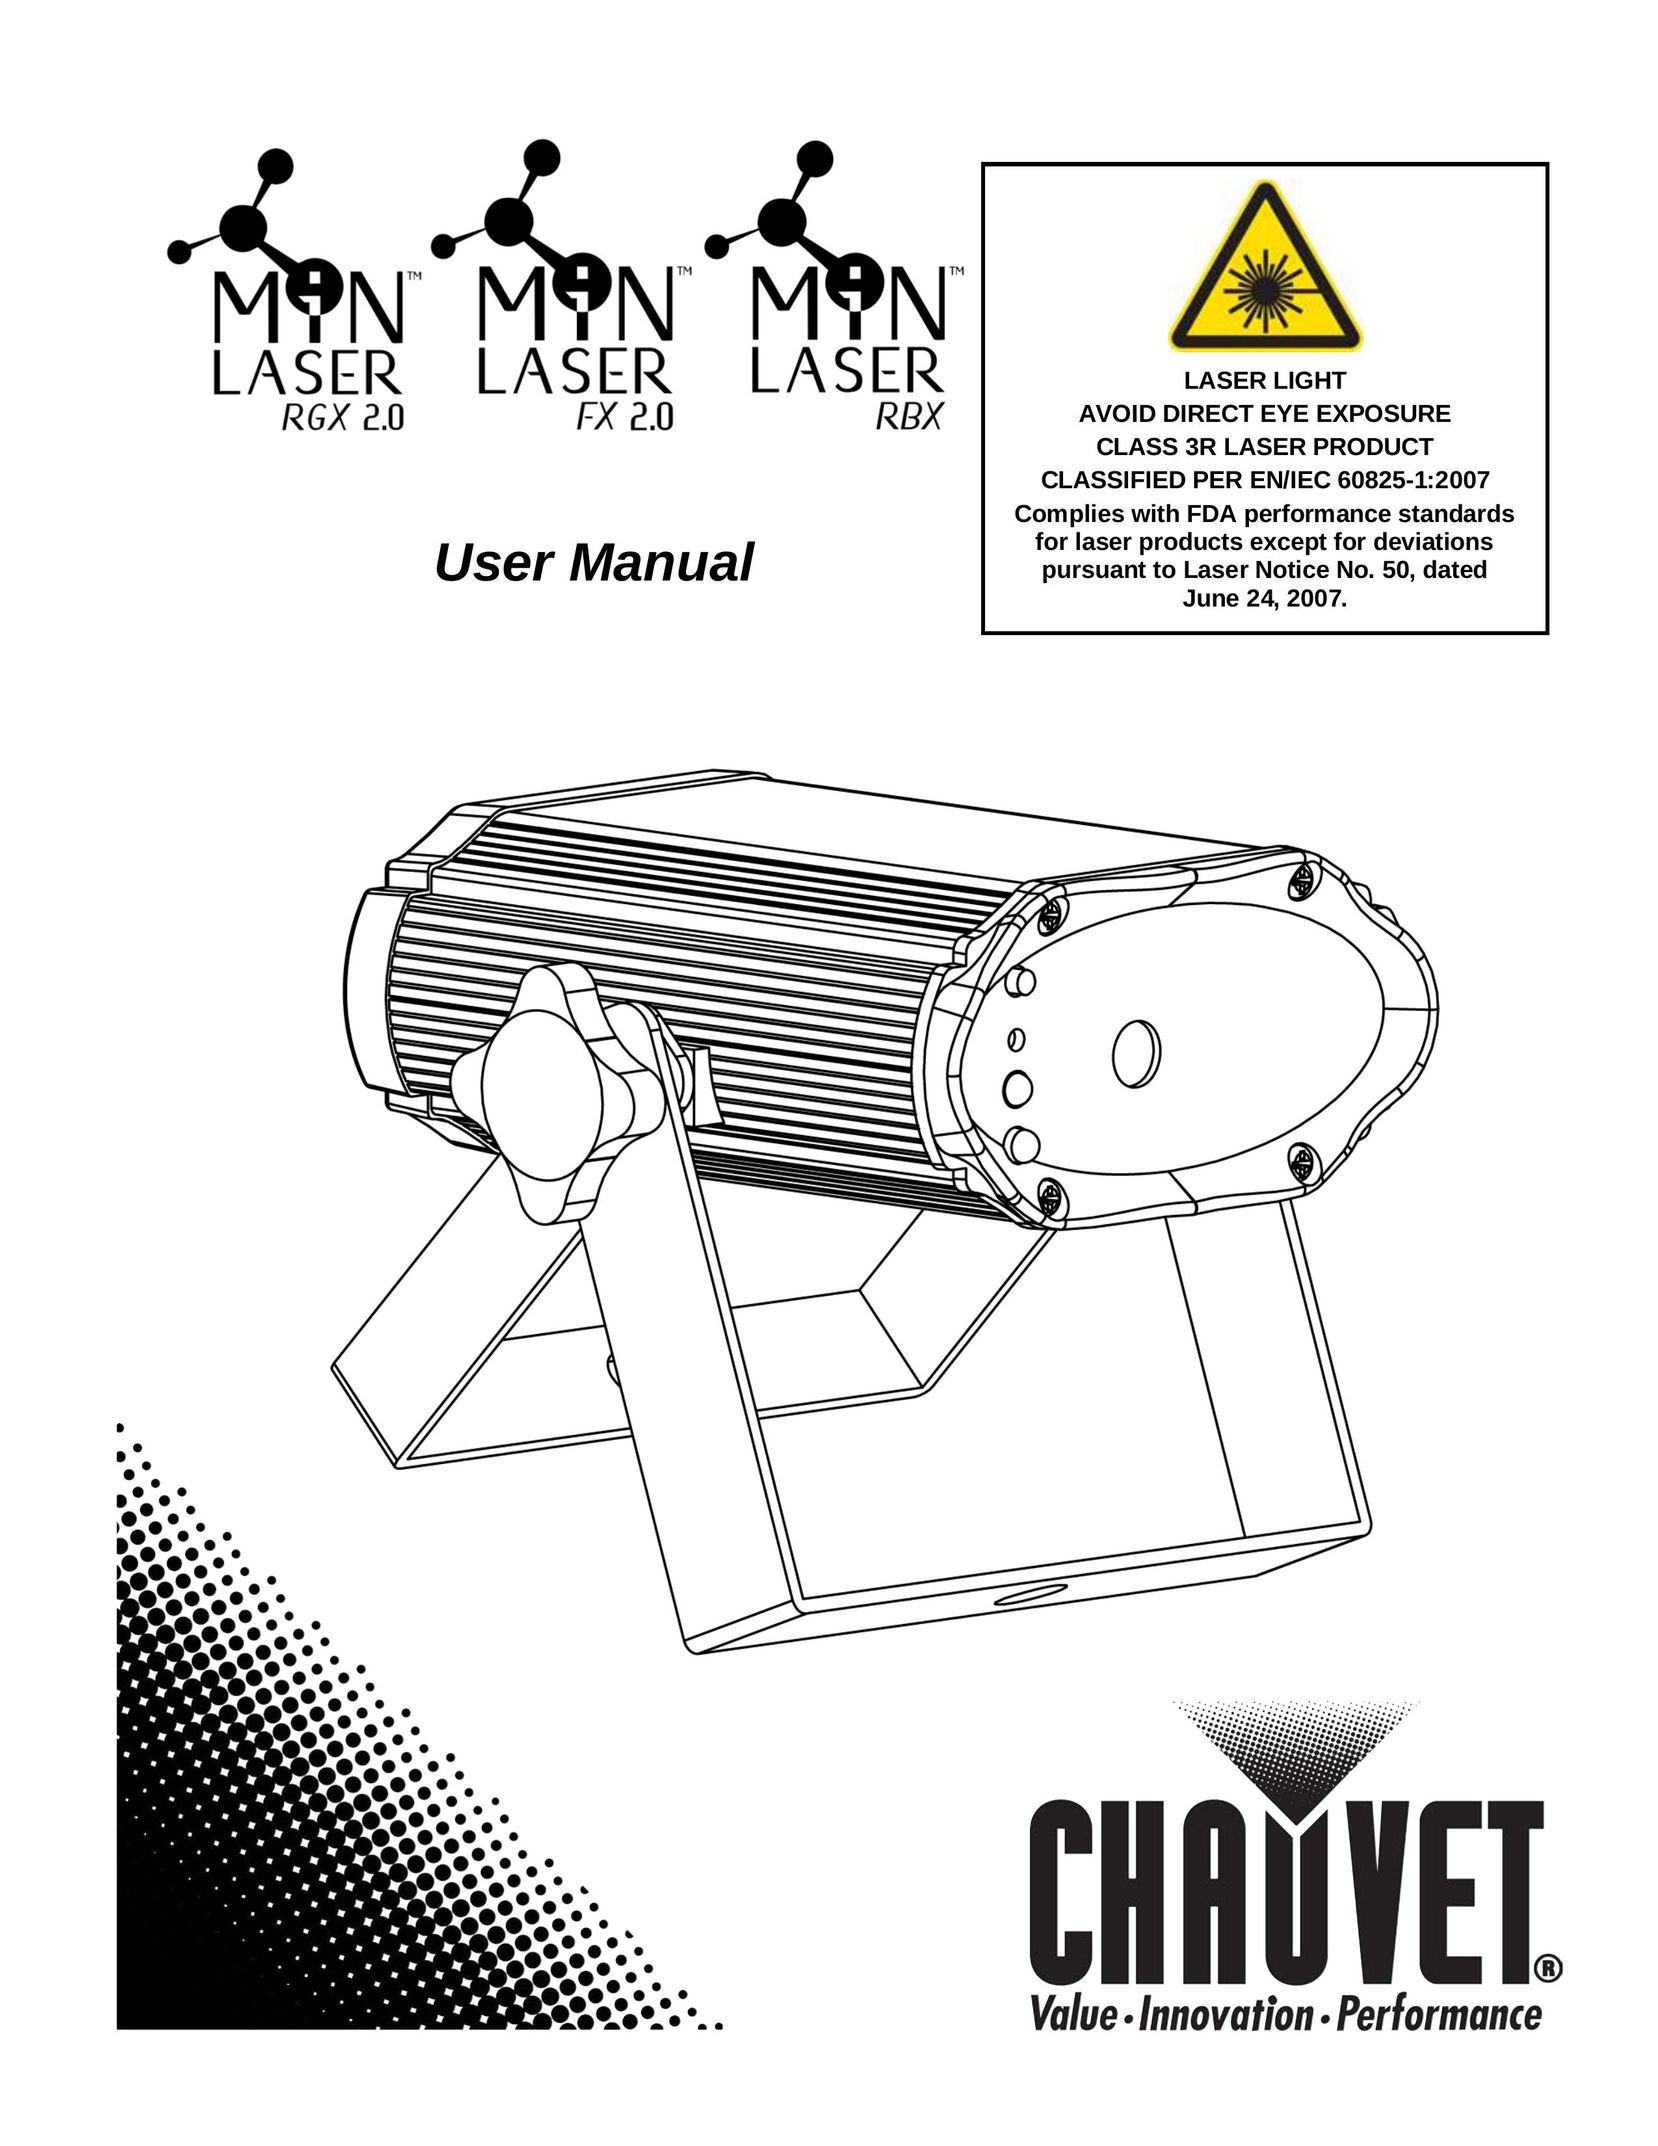 Chauvet RGX 2.0 DVD Player User Manual